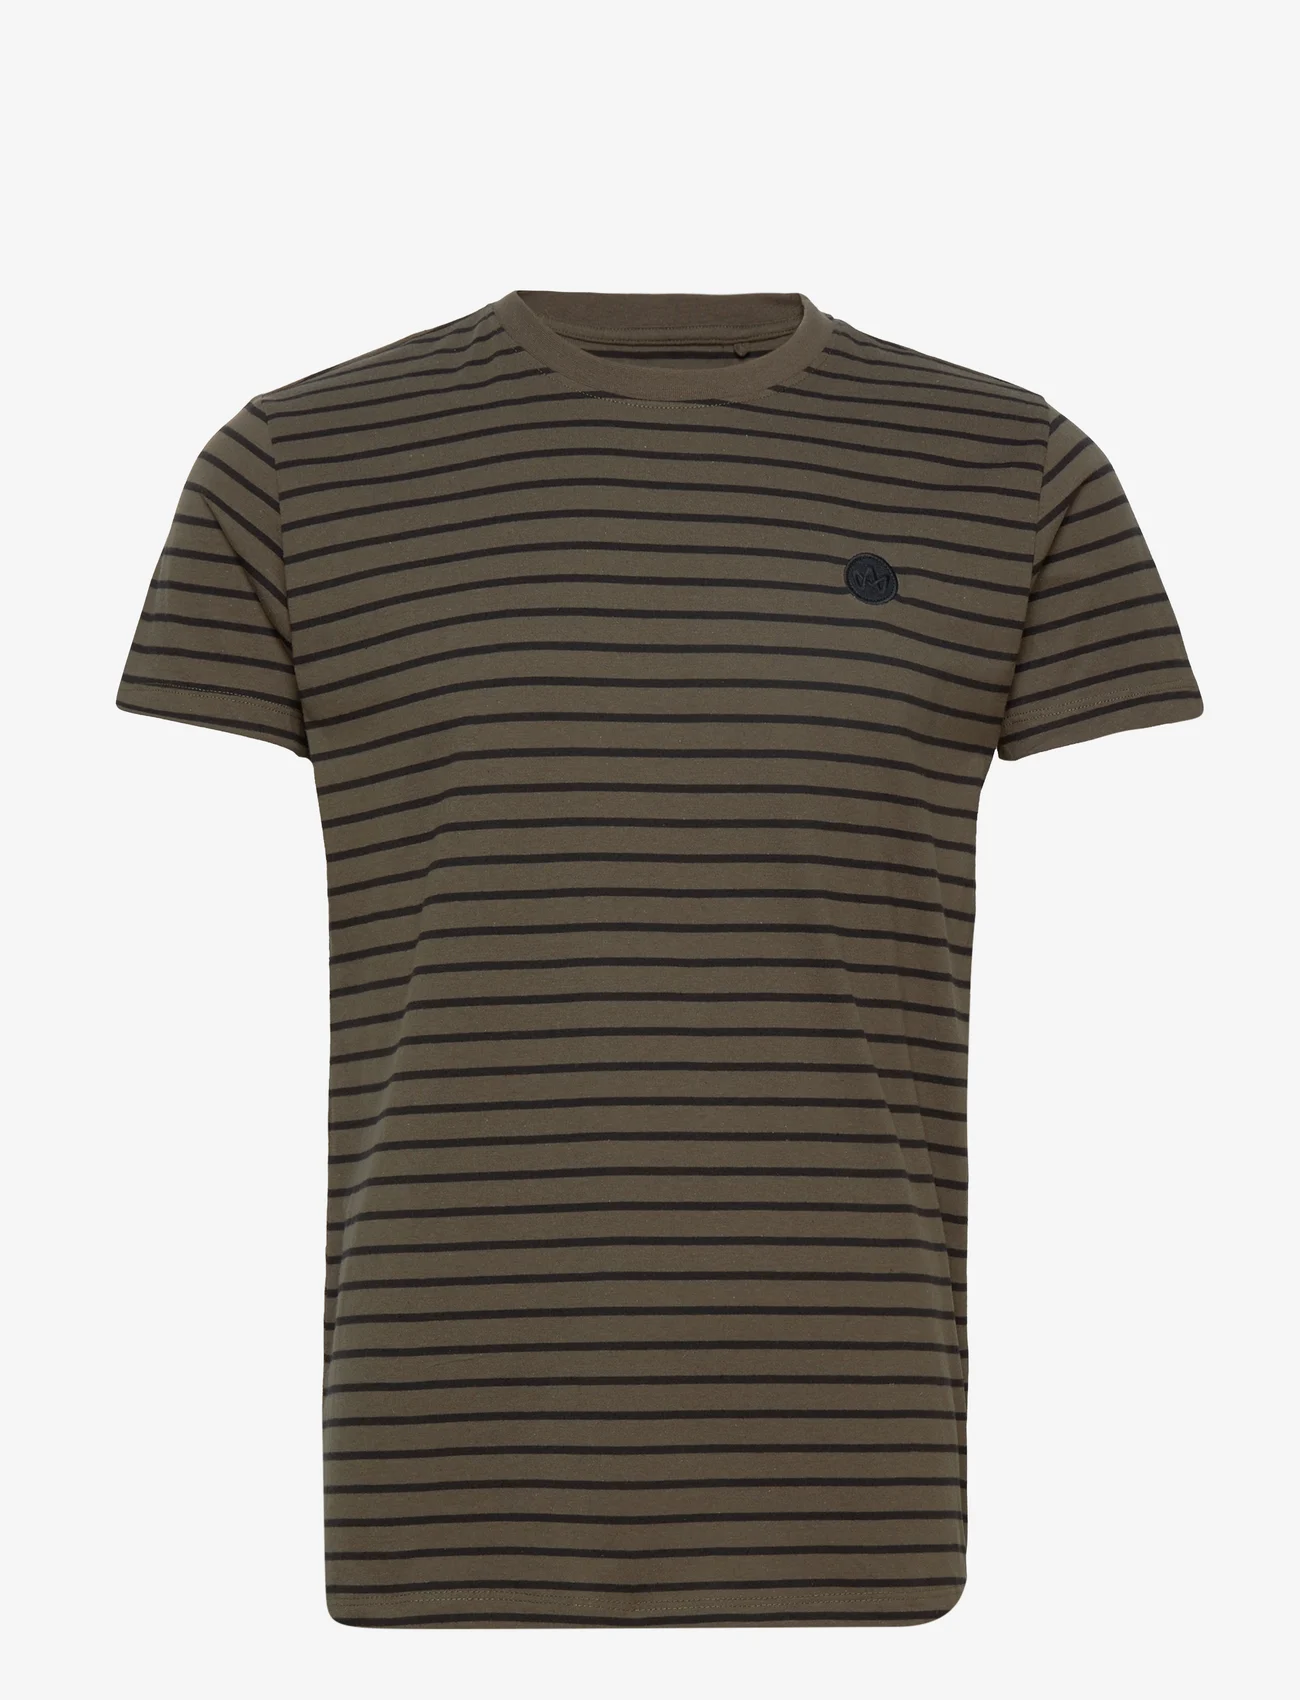 Kronstadt - Timmi Organic/Recycled striped t-shirt - army / black - 0